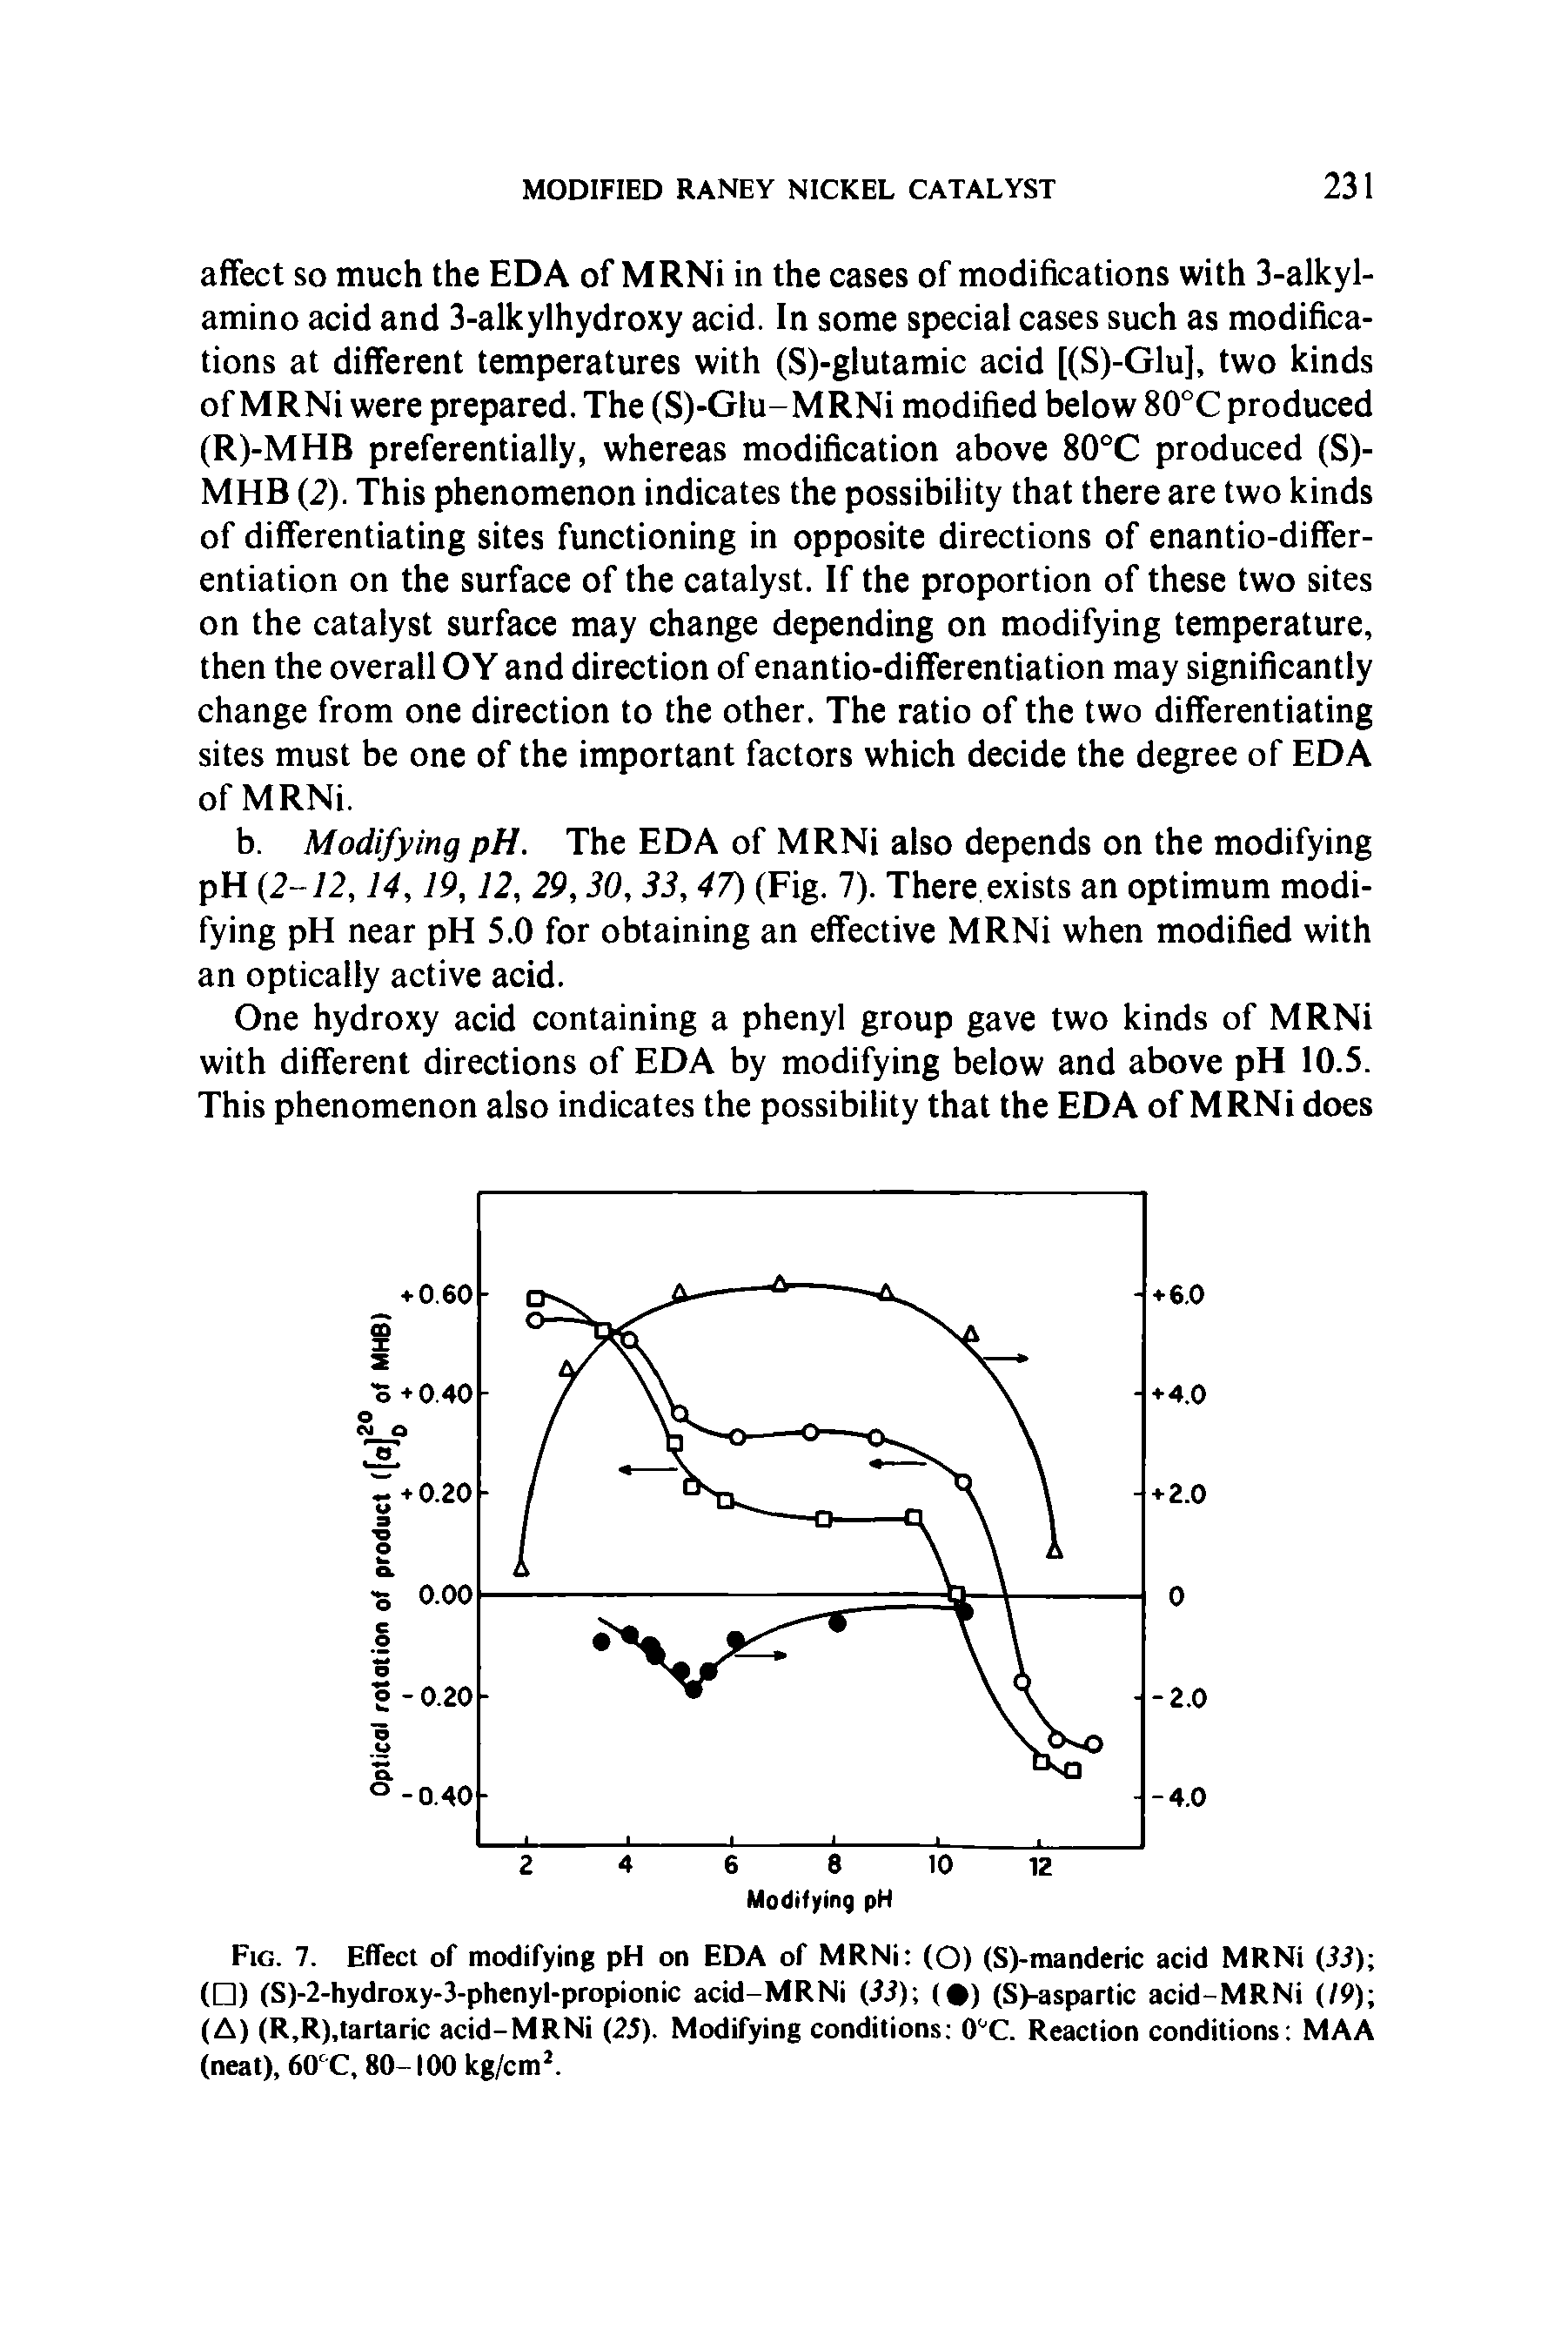 Fig. 7. Effect of modifying pH on EDA of MRNi (O) (S)-manderic acid MRNi (33) ( ) (S)-2-hydroxy-3-phenyl-propionic acid-MRNi (33) ( ) (S)-aspartic acid-MRNi (19) (A) (R.R),tartaric acid-MRNi (25). Modifying conditions 0°C. Reaction conditions MAA (neat), 60 C, 80-100 kg/cm2.